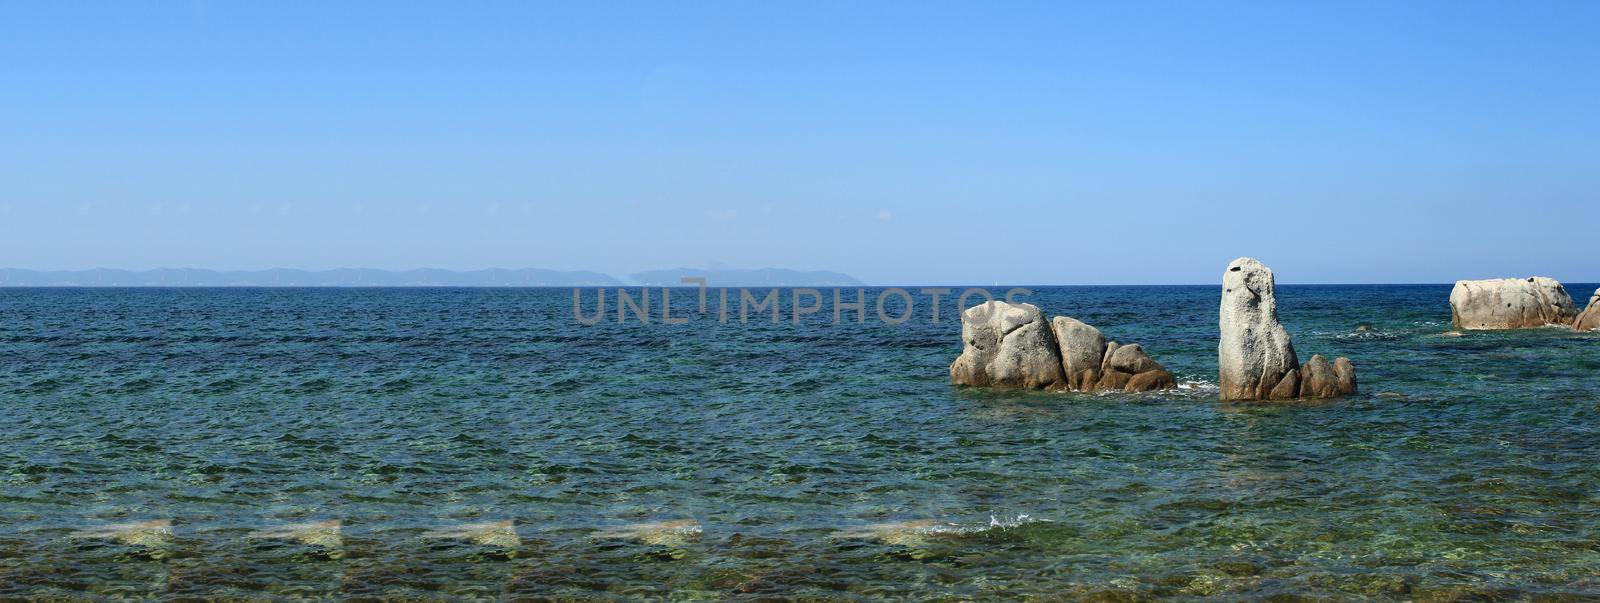 Sardinia beach landscape banner by pippocarlot